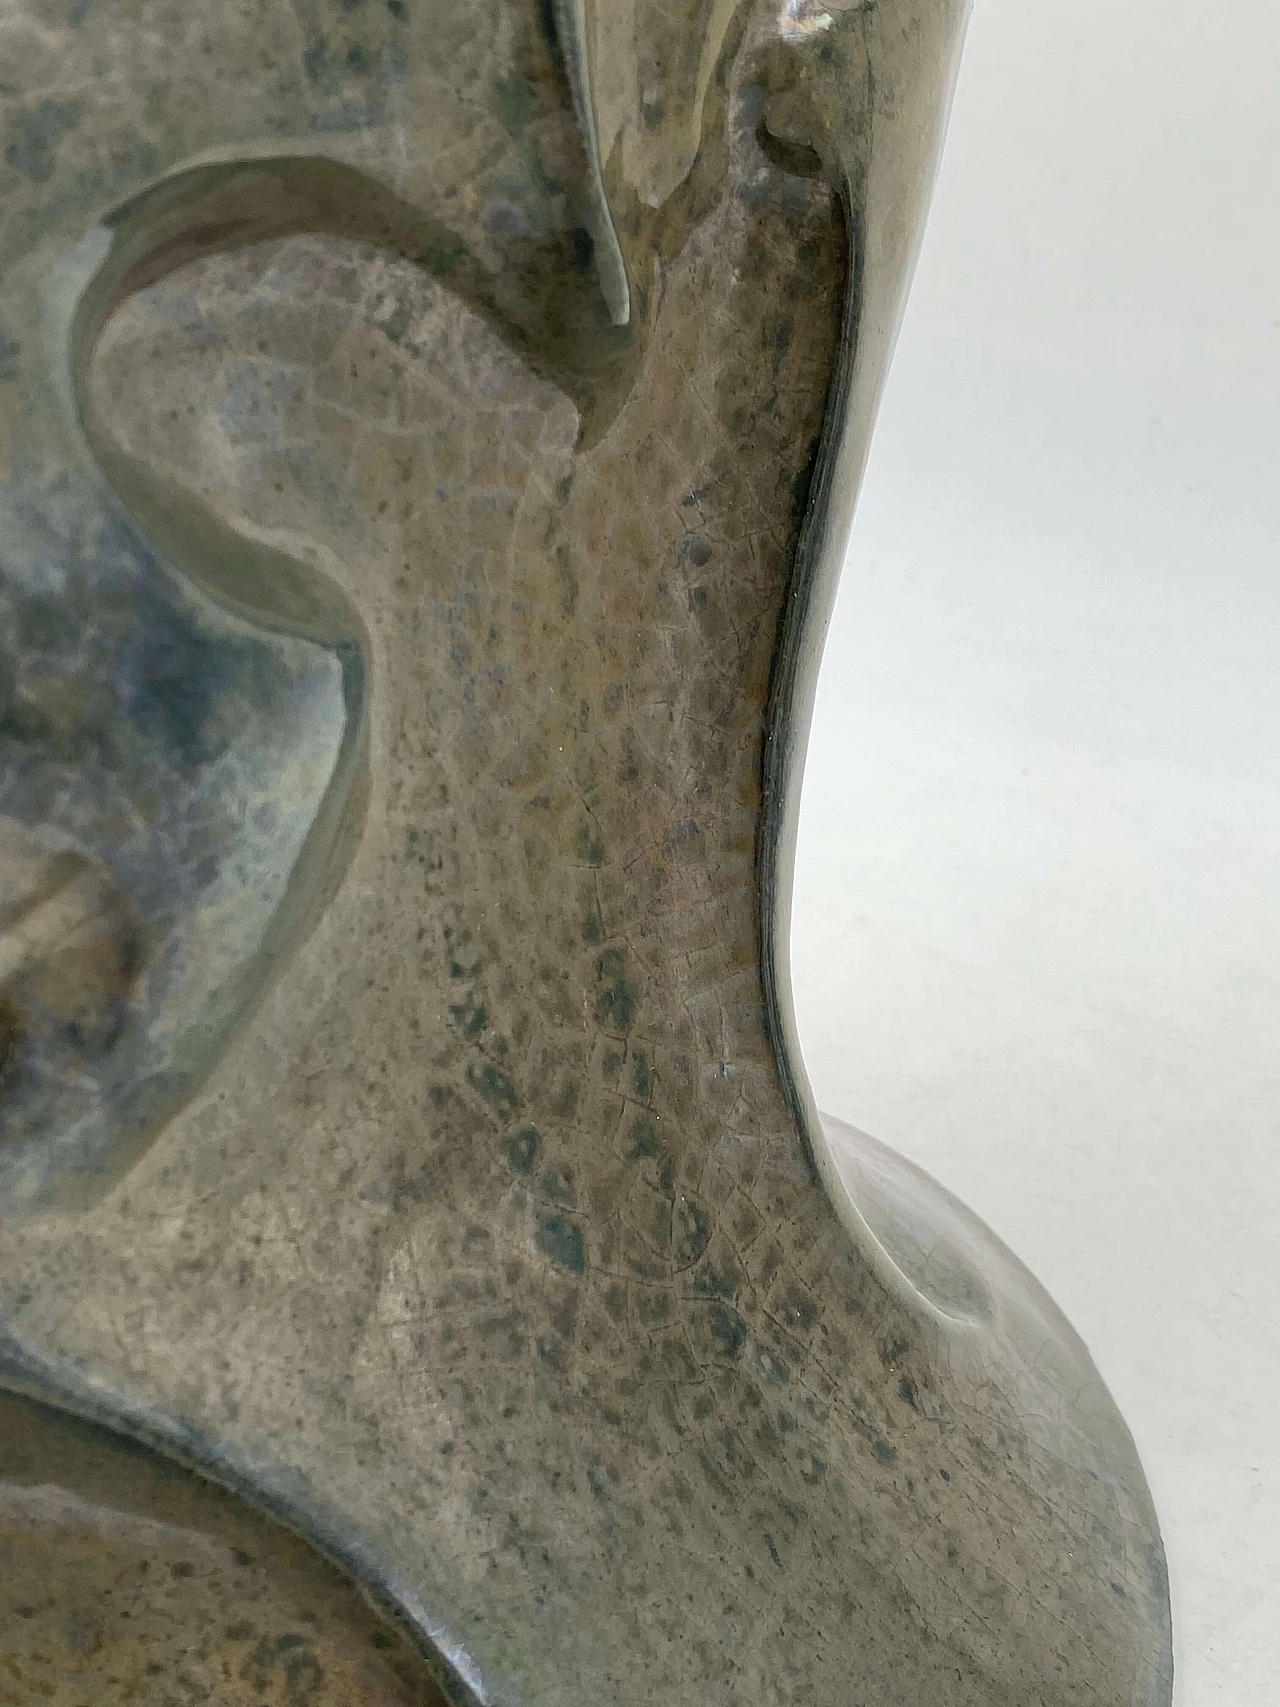 A. Chini, Créature Fantastique, scultura in ceramica craquelé, anni '30 1306790